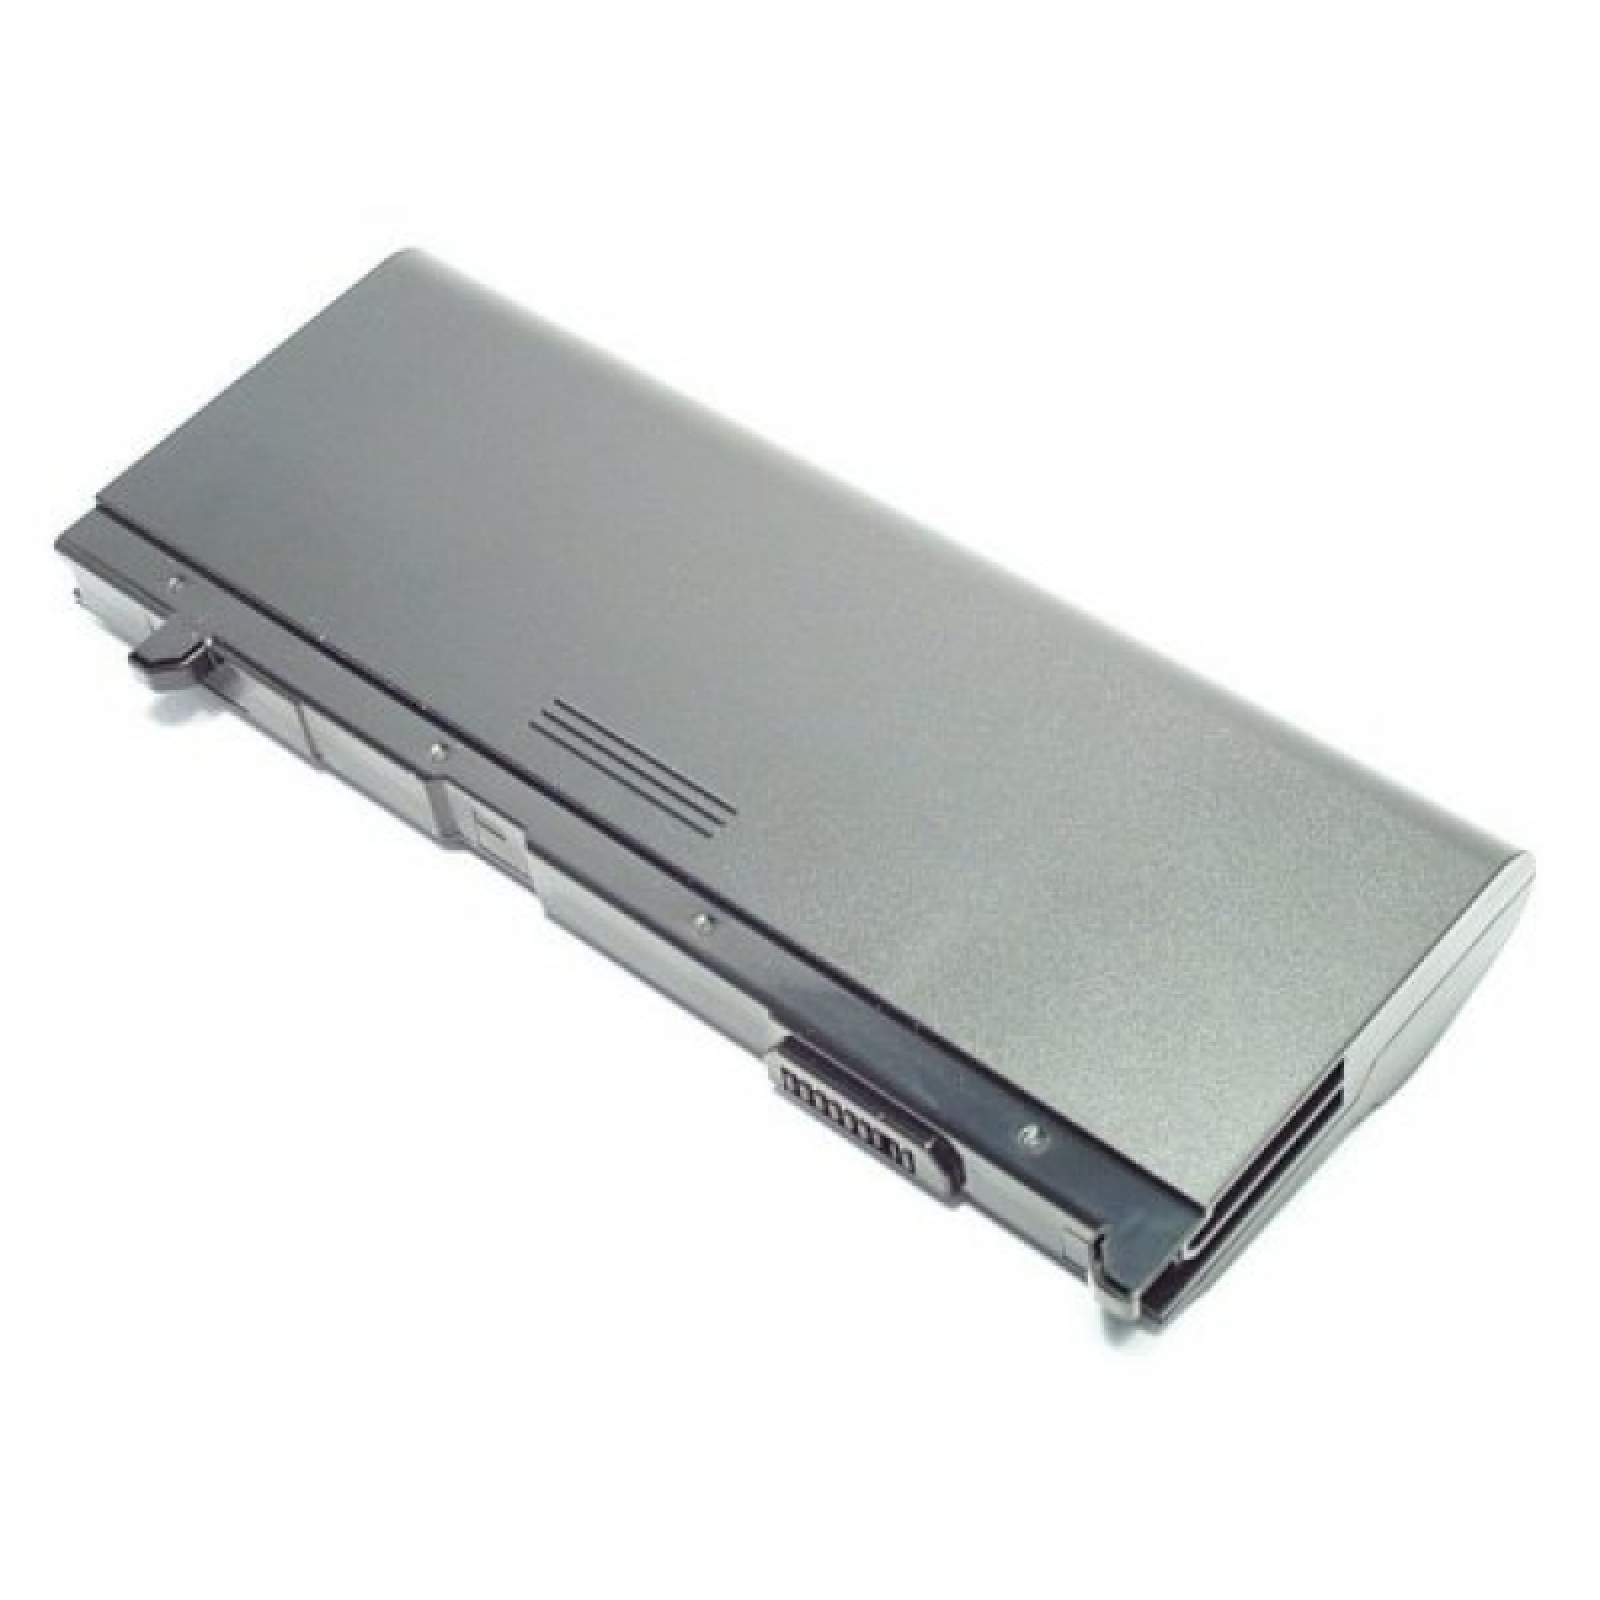 Kapazität 10.8 Volt, (LiIon) Lithium-Ionen 8800 mAh Notebook-Akku, doppelte Akku 10.8V, A100-274, Satellite TOSHIBA MTXTEC 8800mAh LiIon, für